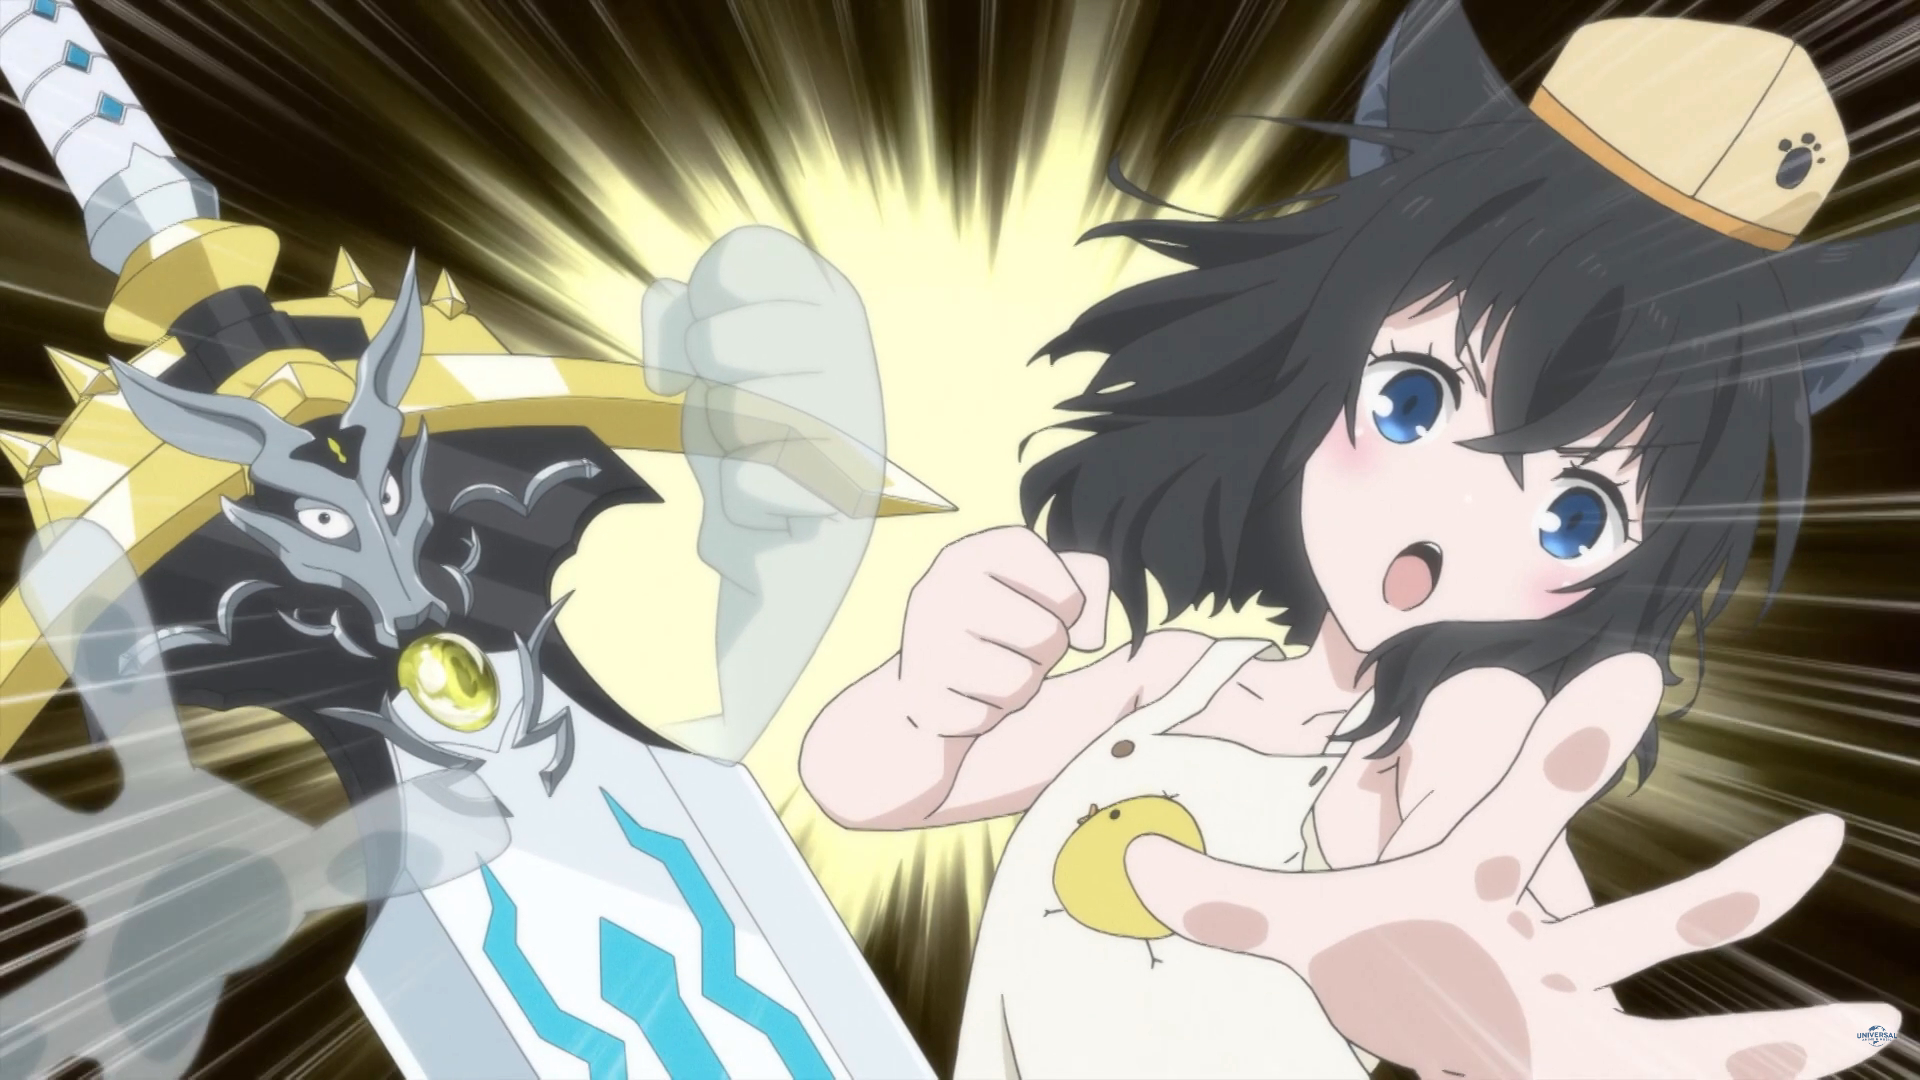 Tensura Season 3 Anime Announced - Anime Corner